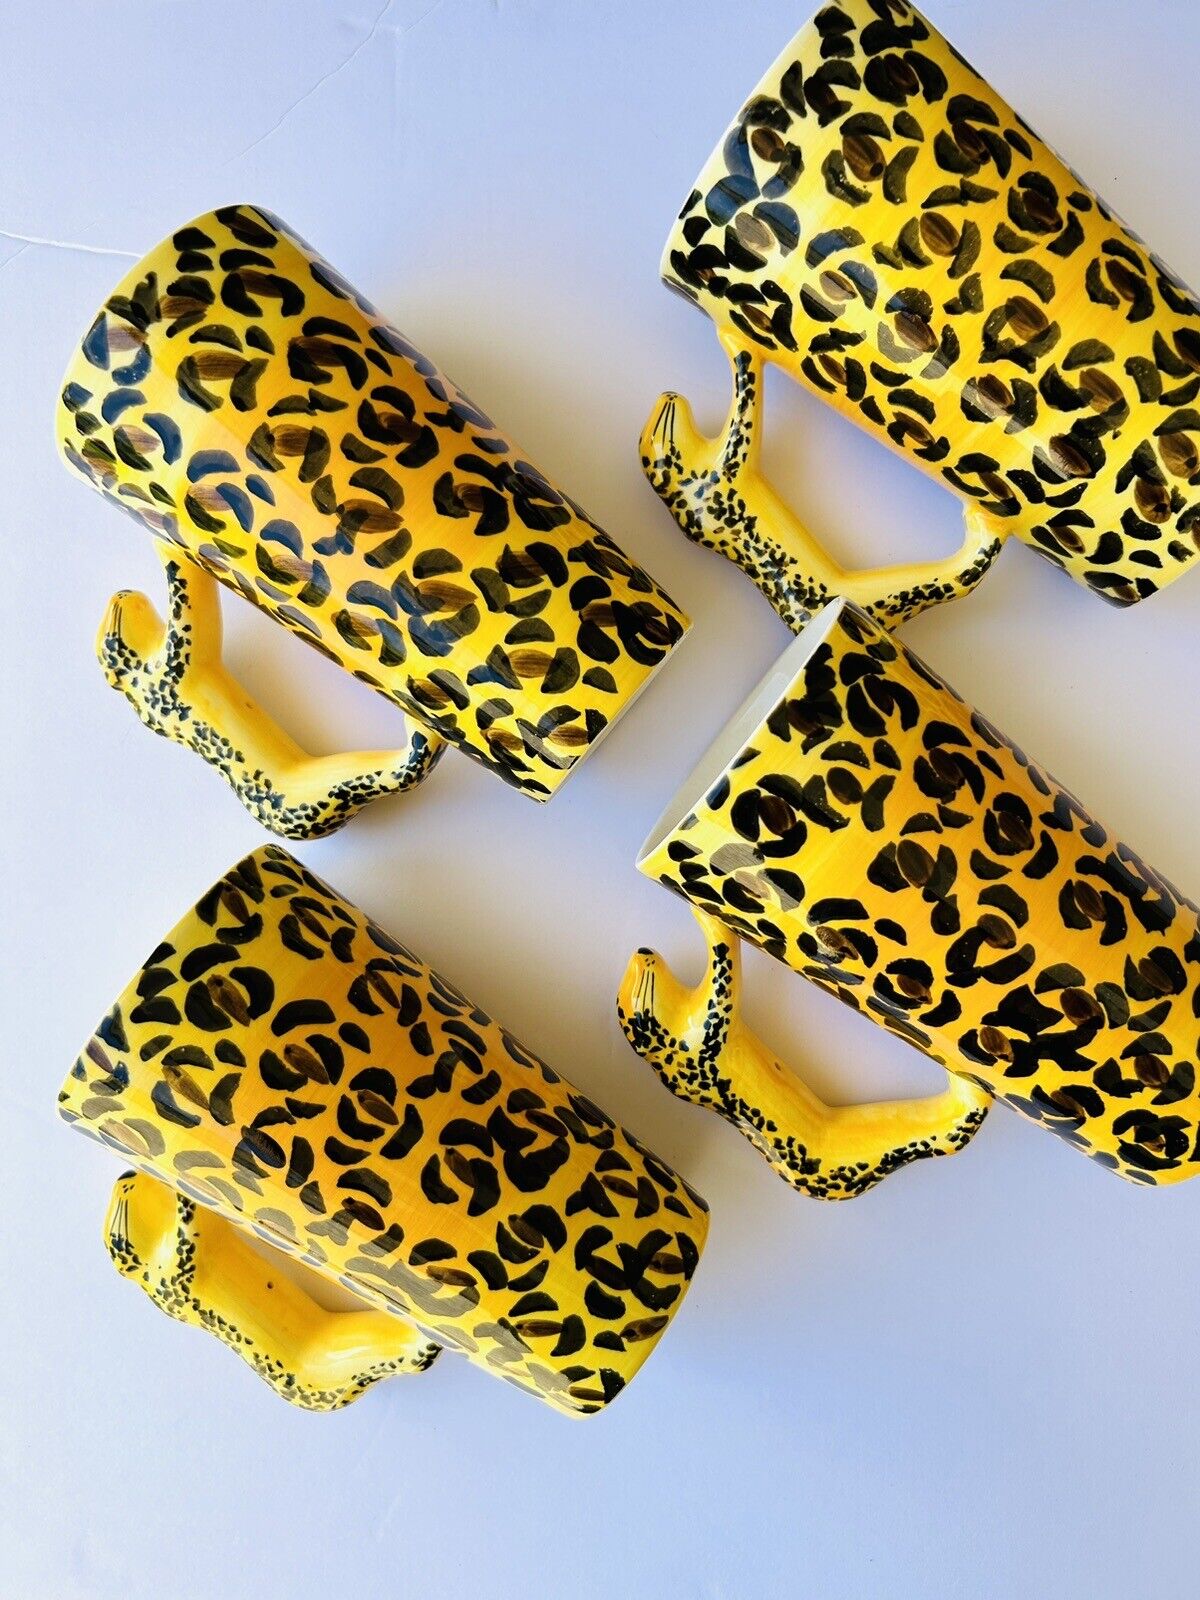 (4) World Market Cheetah Leopard Handle Coffee Mug Cup Yellow Black